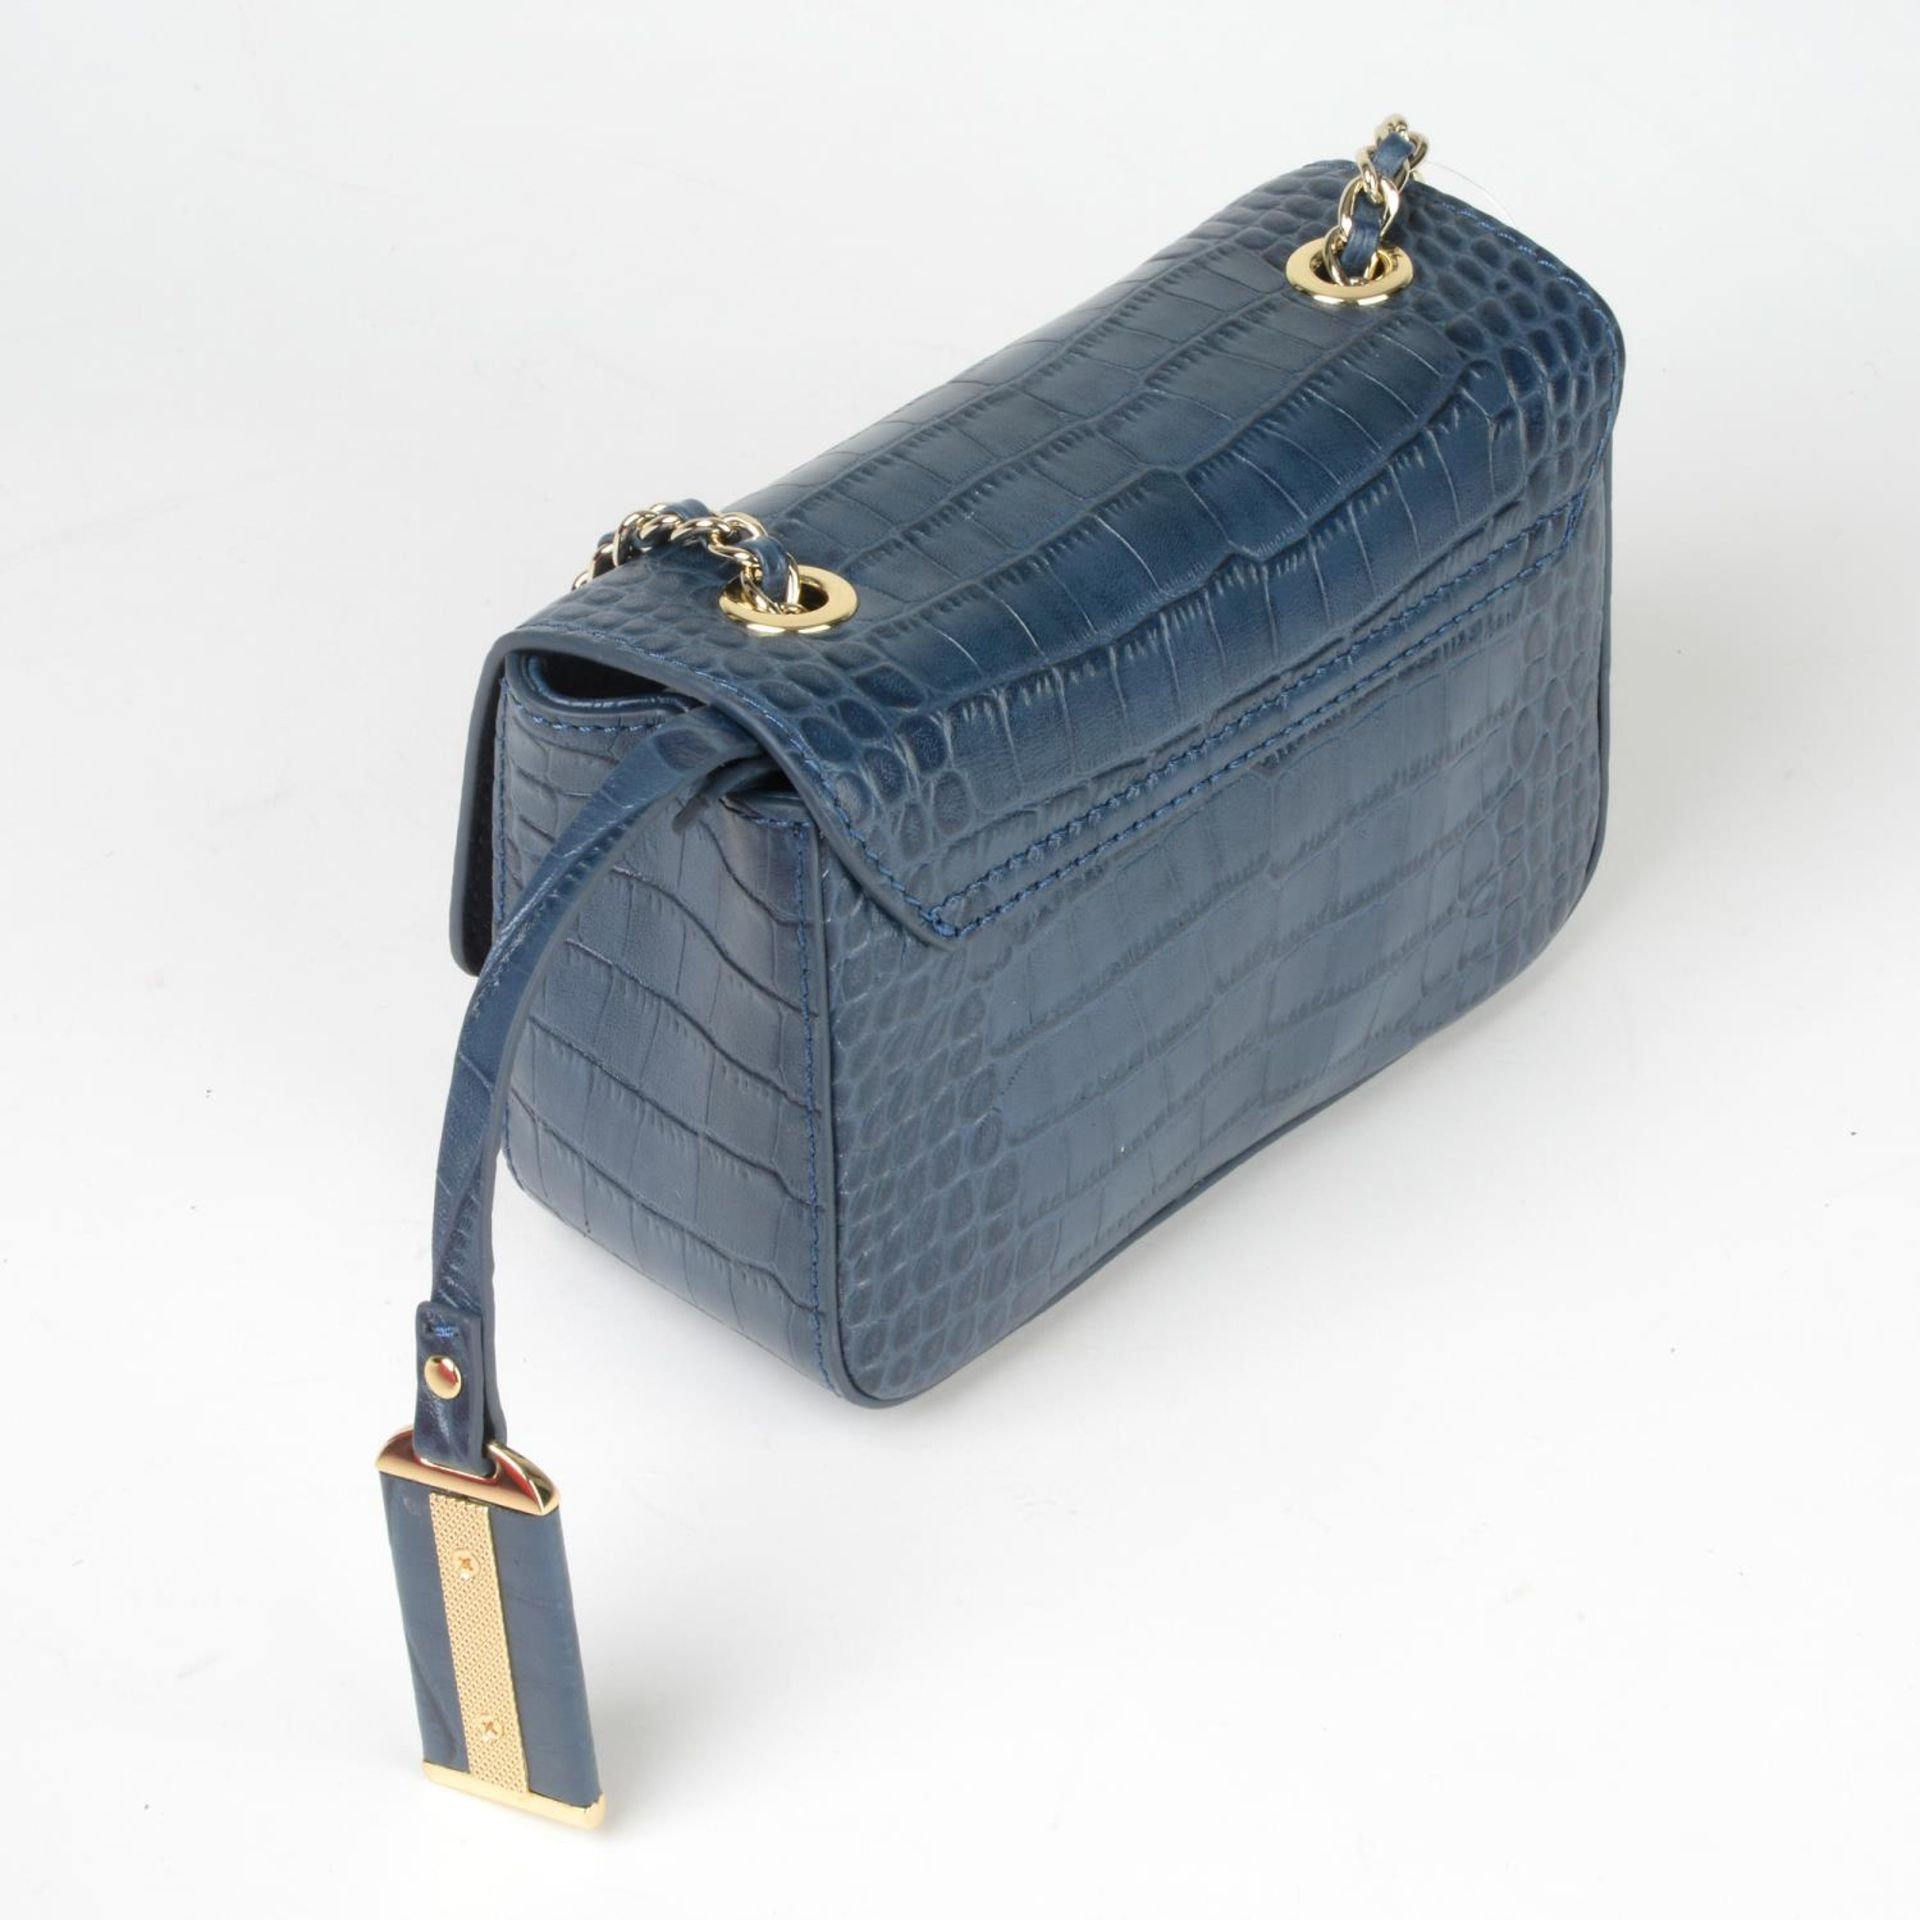 CAVALLO MODA - two leather handbags. - Image 3 of 5